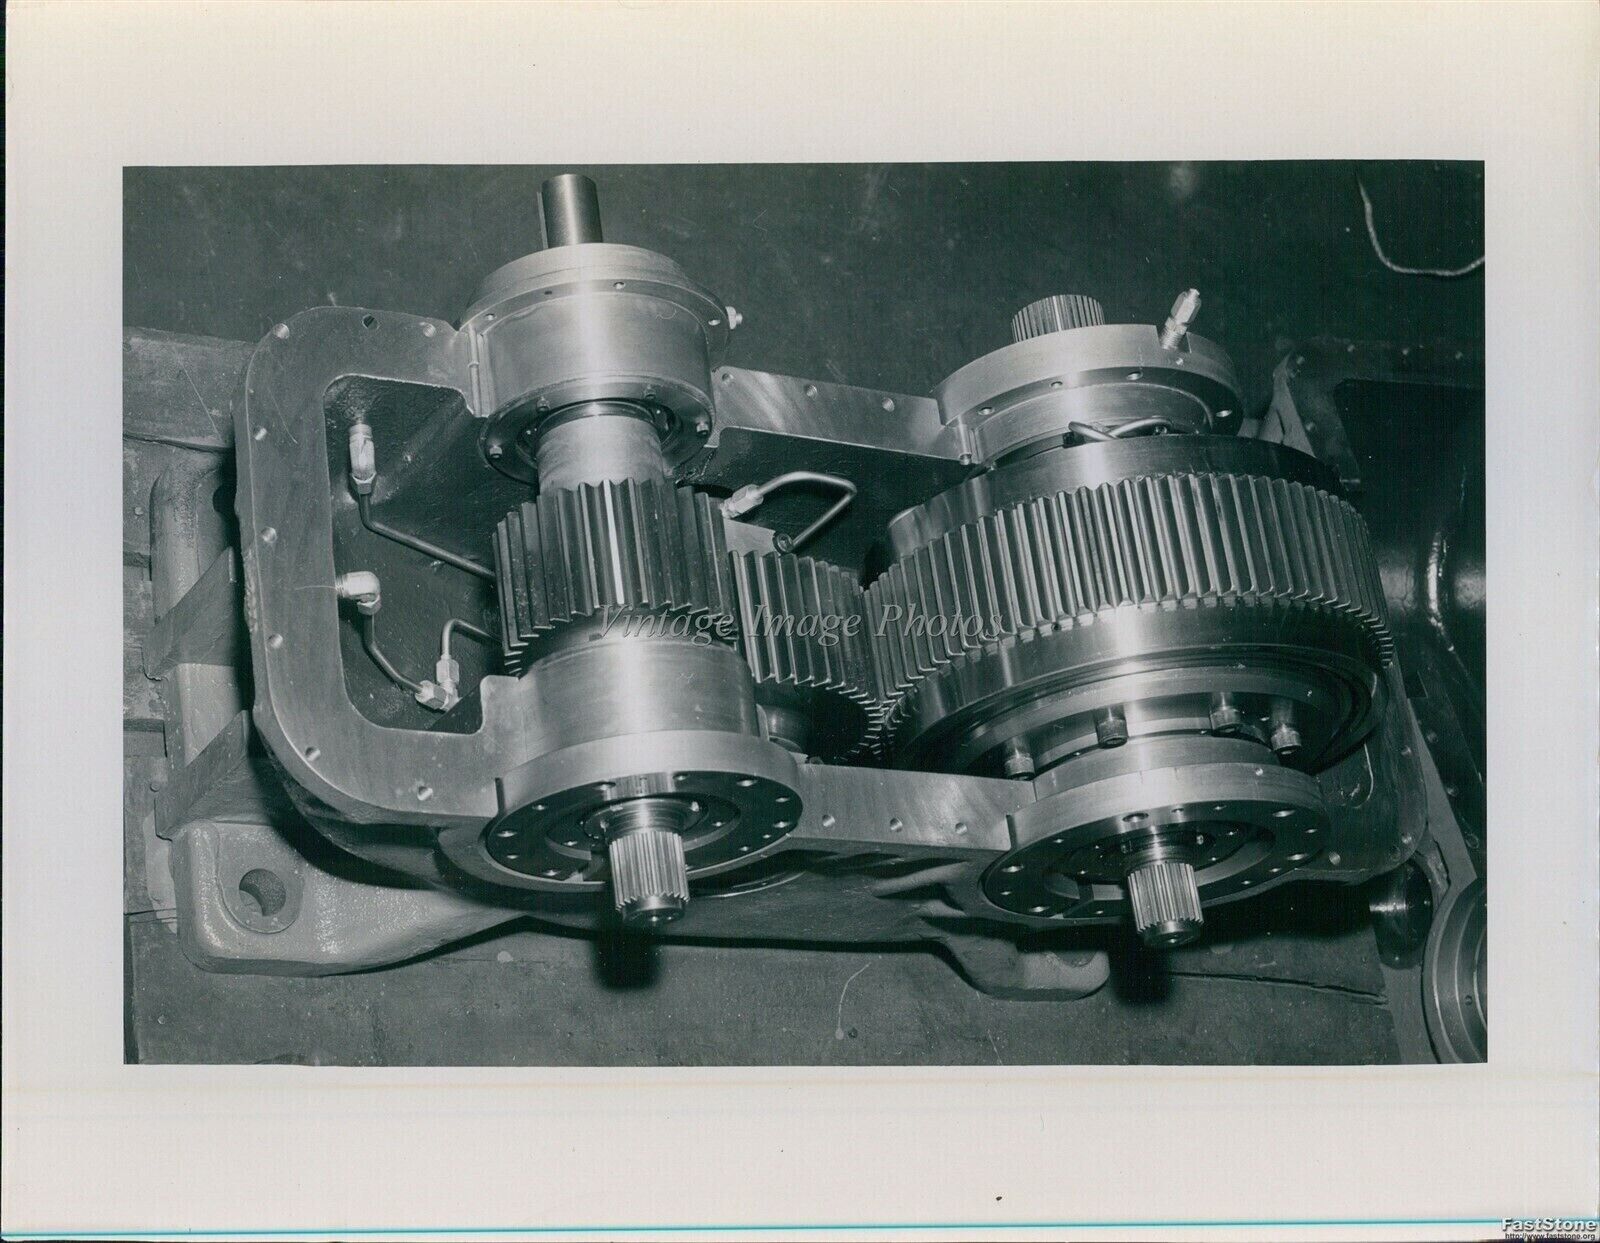 1959 Bendix Aviation Corp Transmission Gears Utica Div Ny Industries Photo 8X10